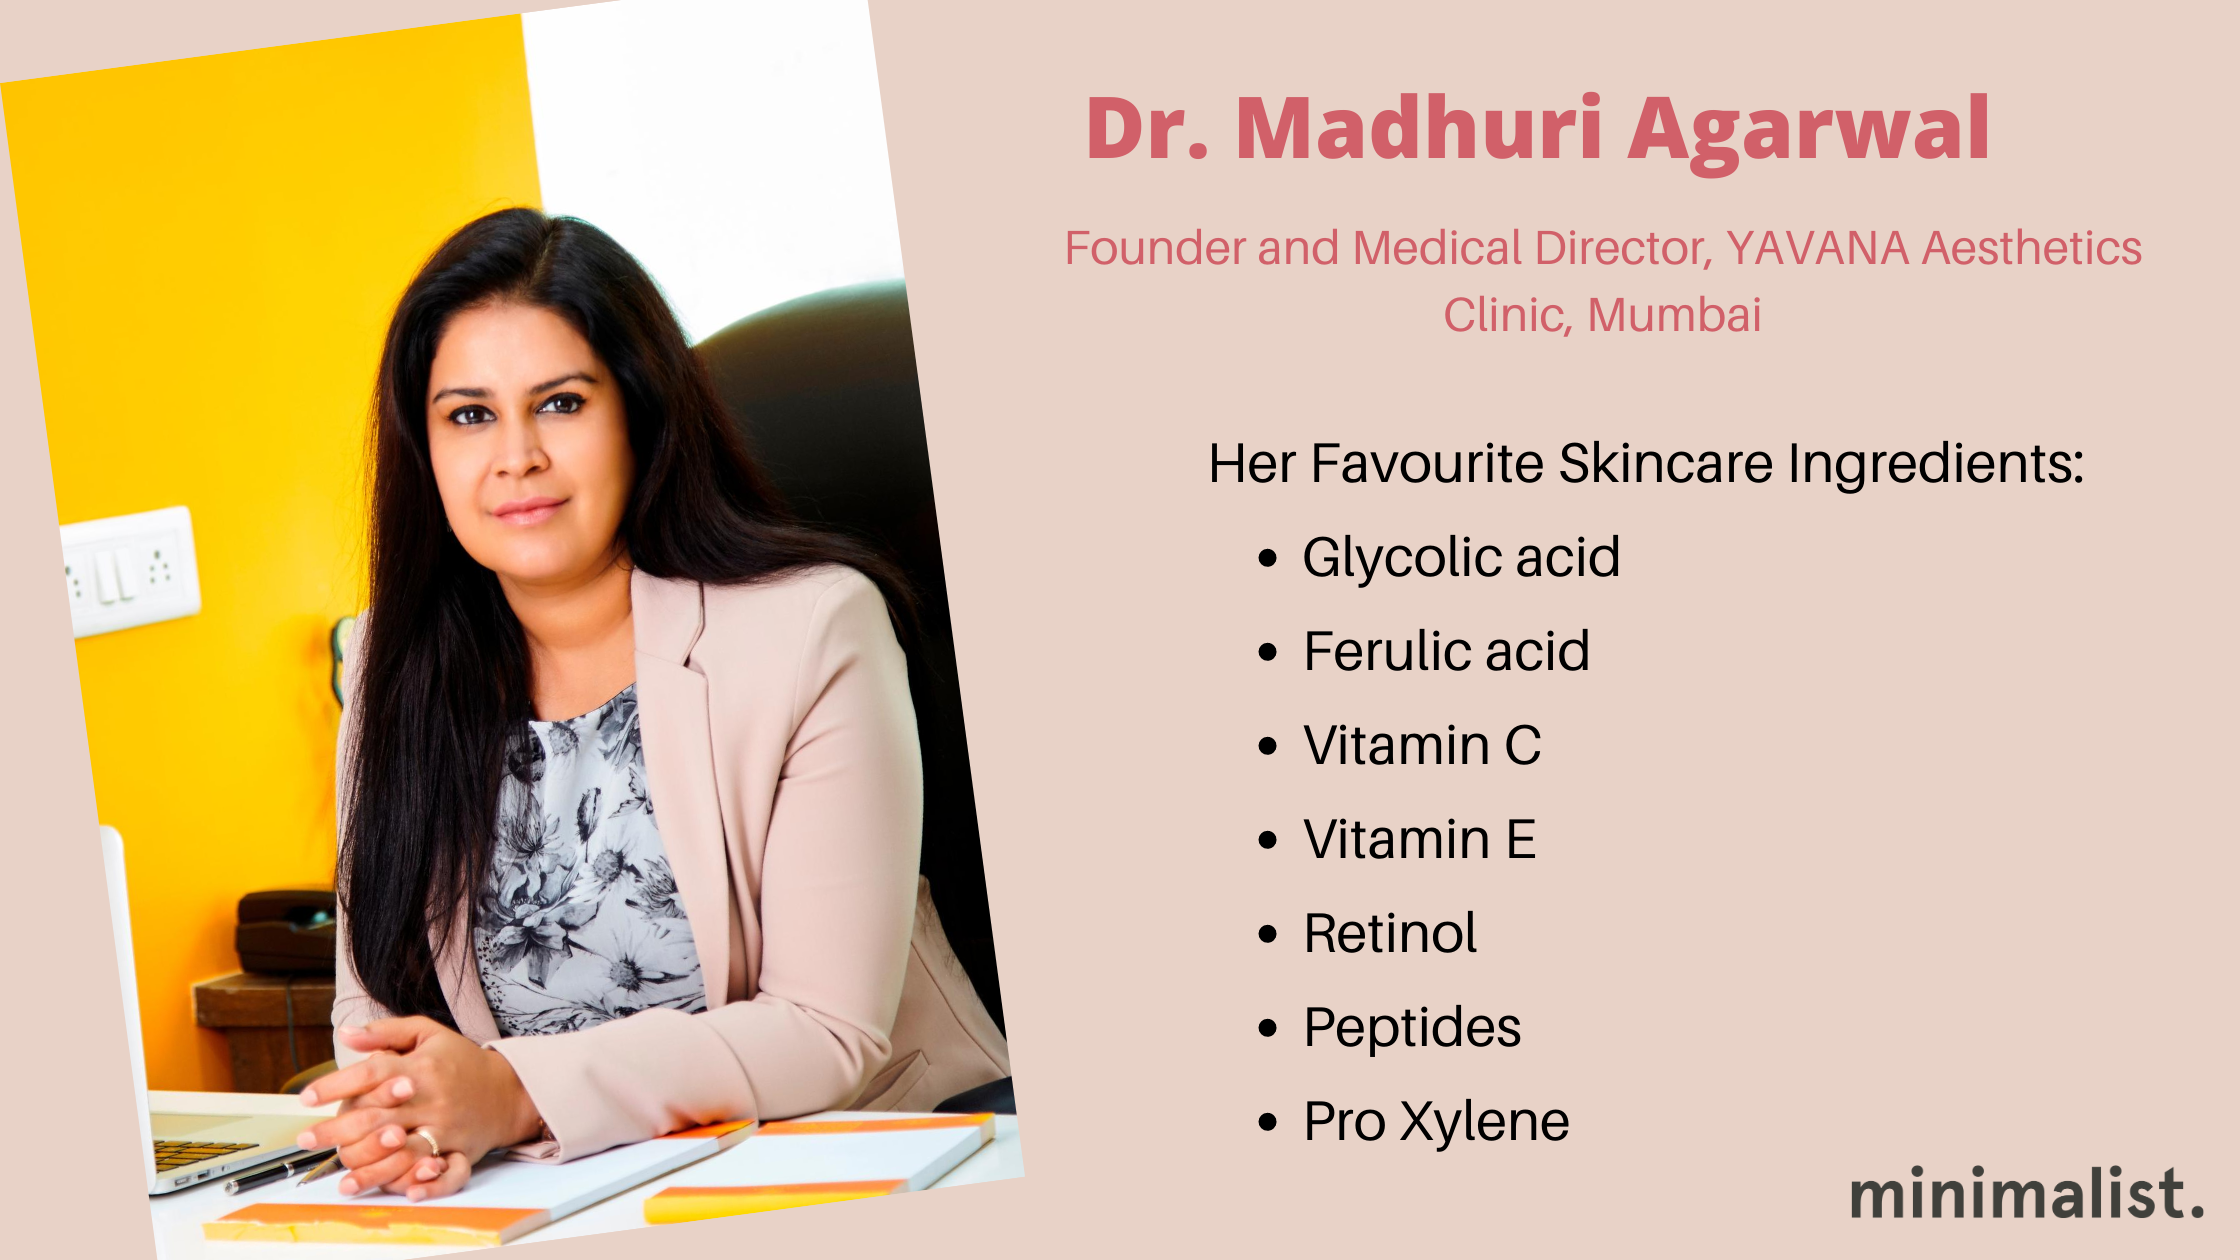 Dr. Madhuri Agarwal